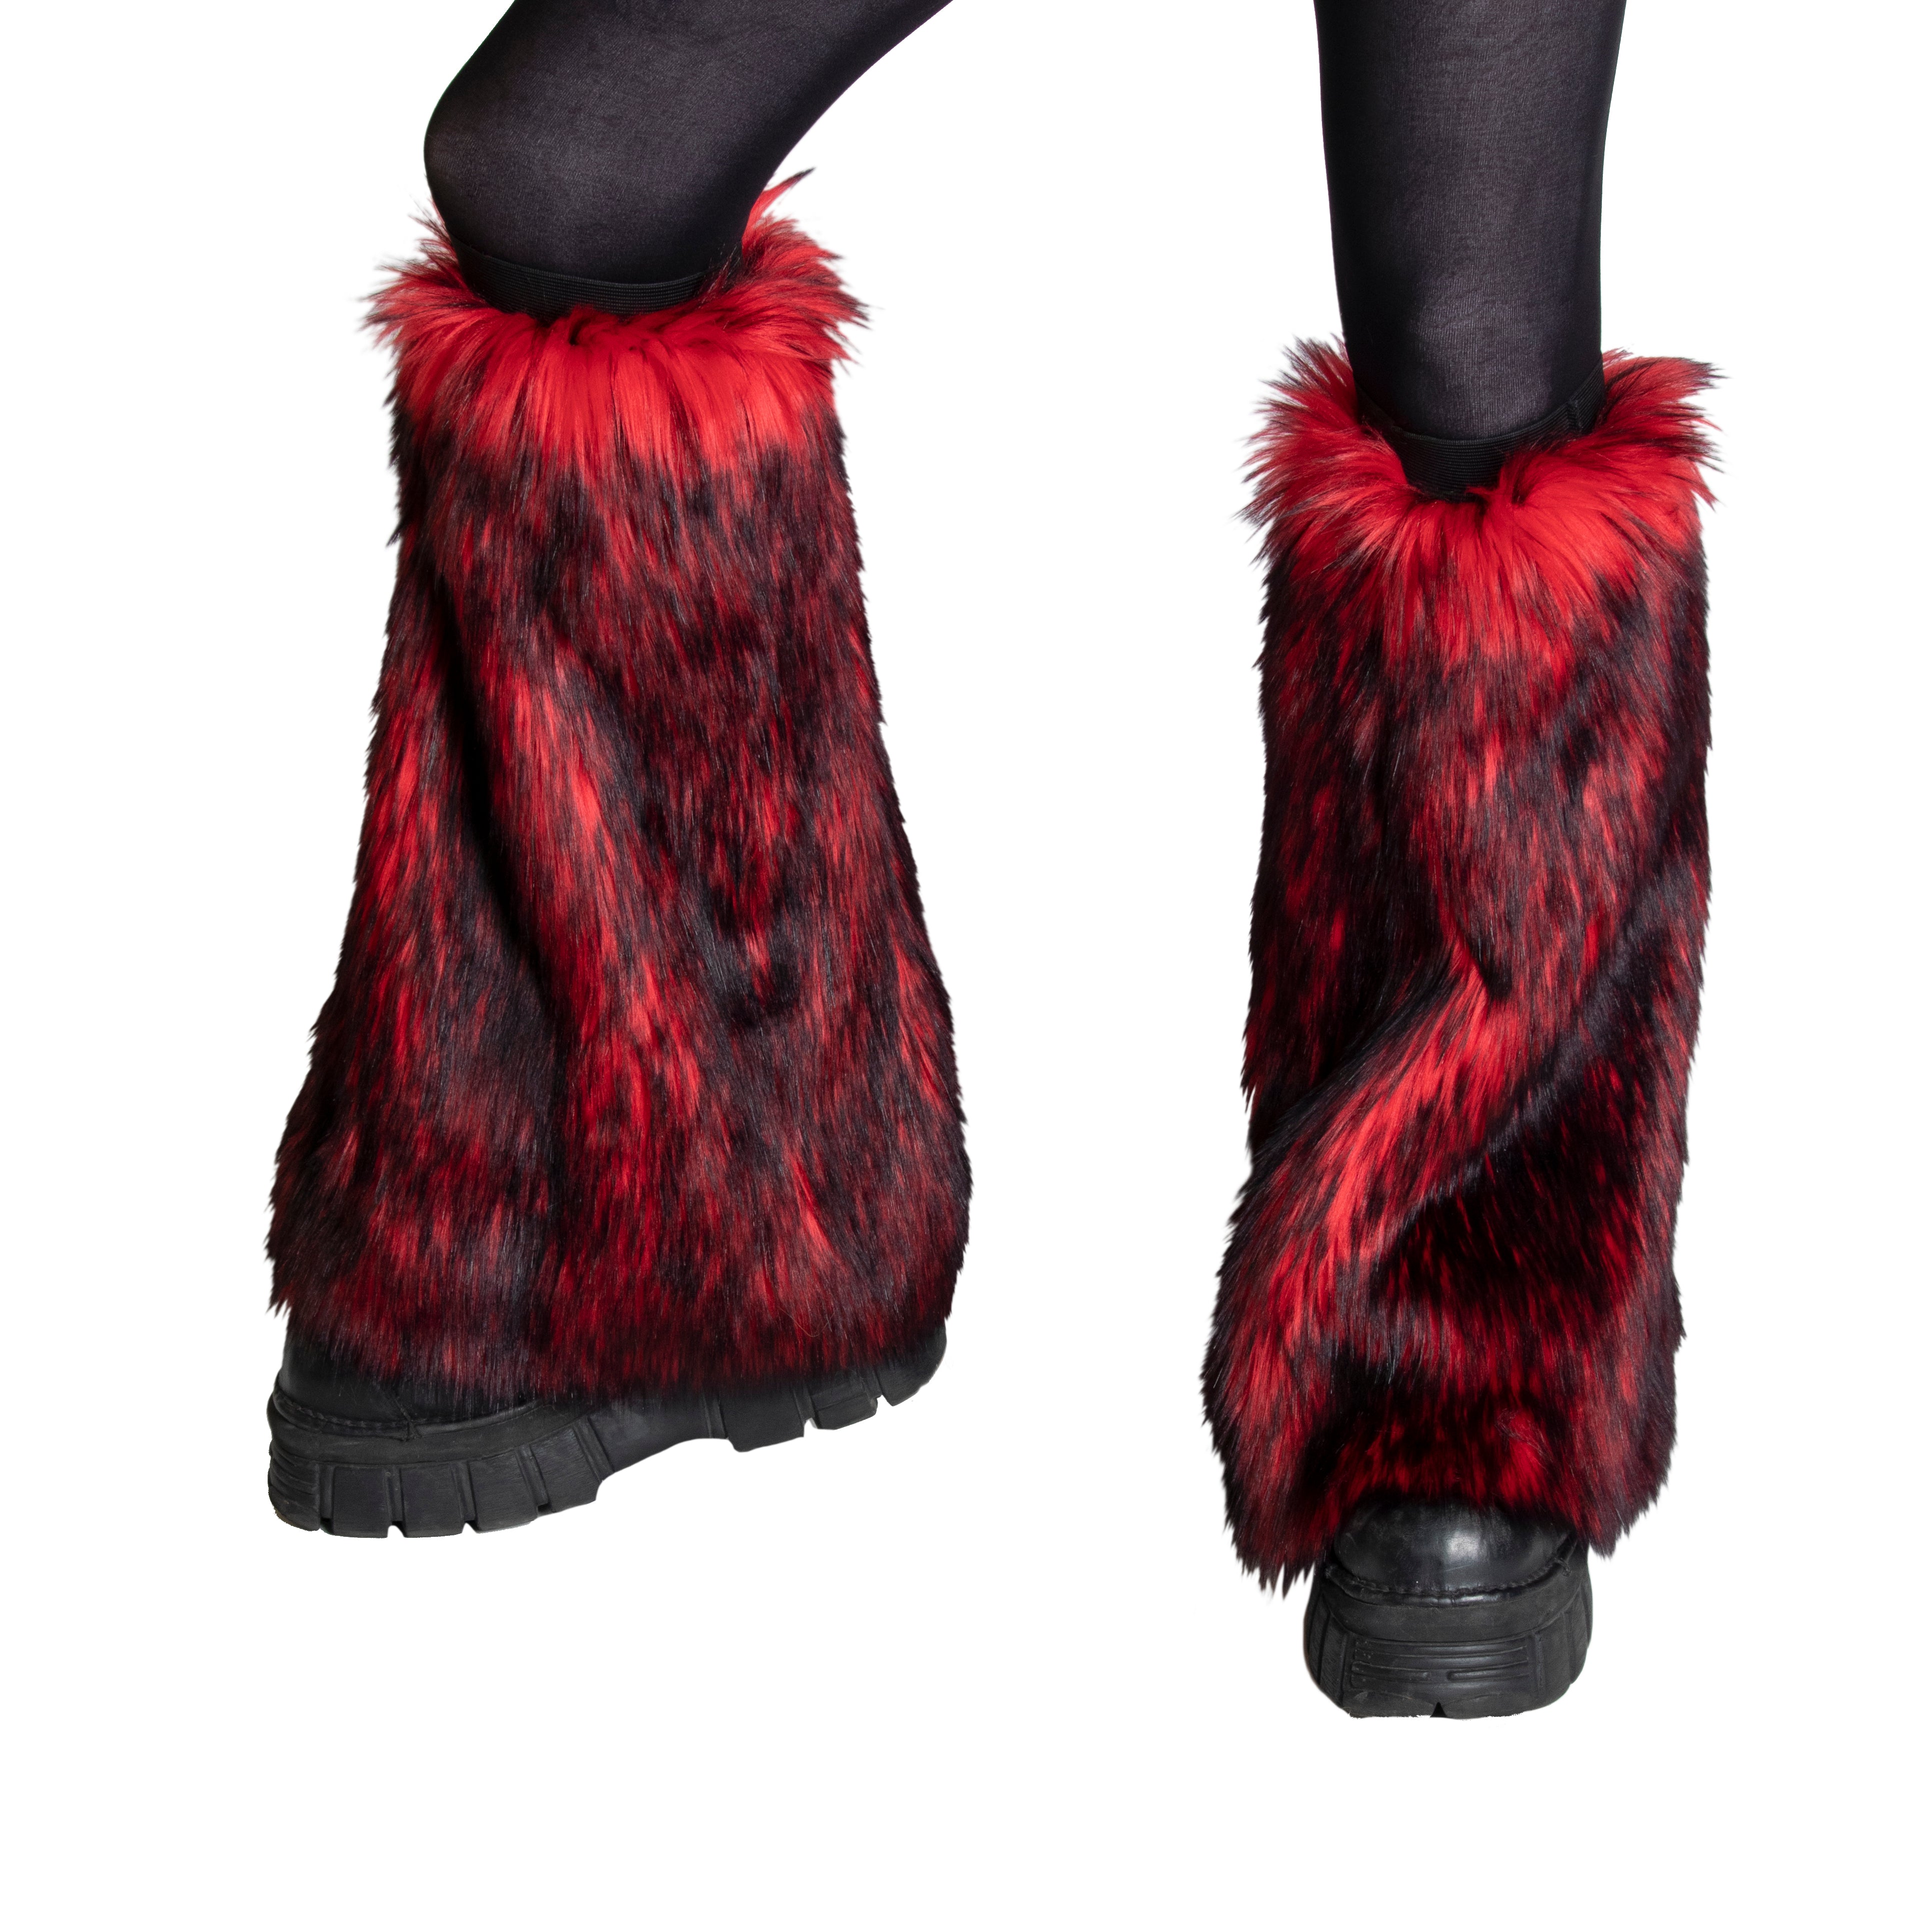 Wild Wolf Fur Leg Warmers - Pawstar Pawstar Leg Warmers cosplay, costume, furry, Legs, ship-15, wolf